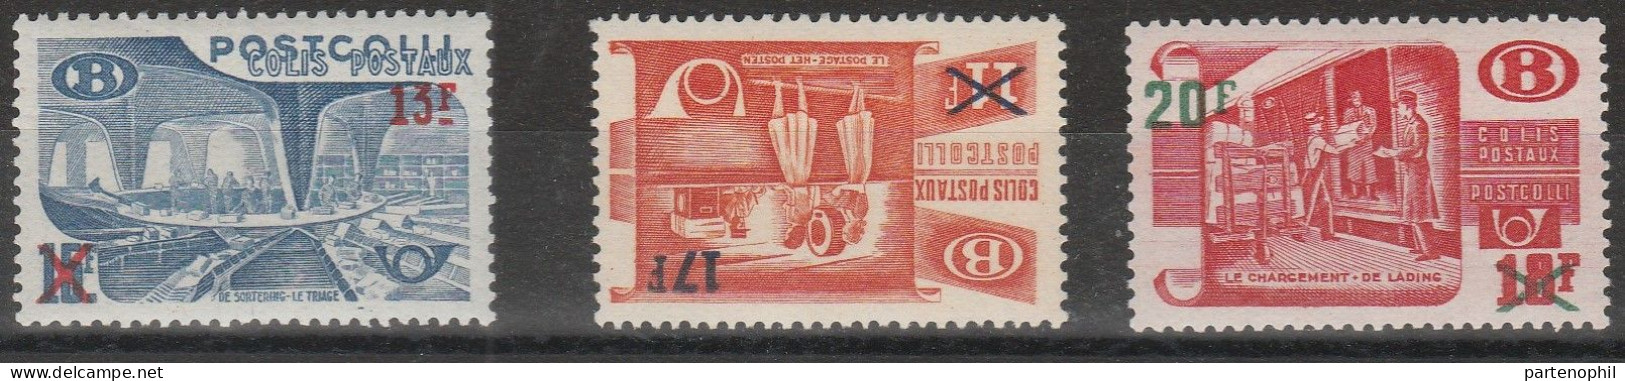 449 Belgio Belgium 1953 - Pacchi Postali - Smistamento Postale N. 331/33. Cat. € 105,00MNH - Neufs